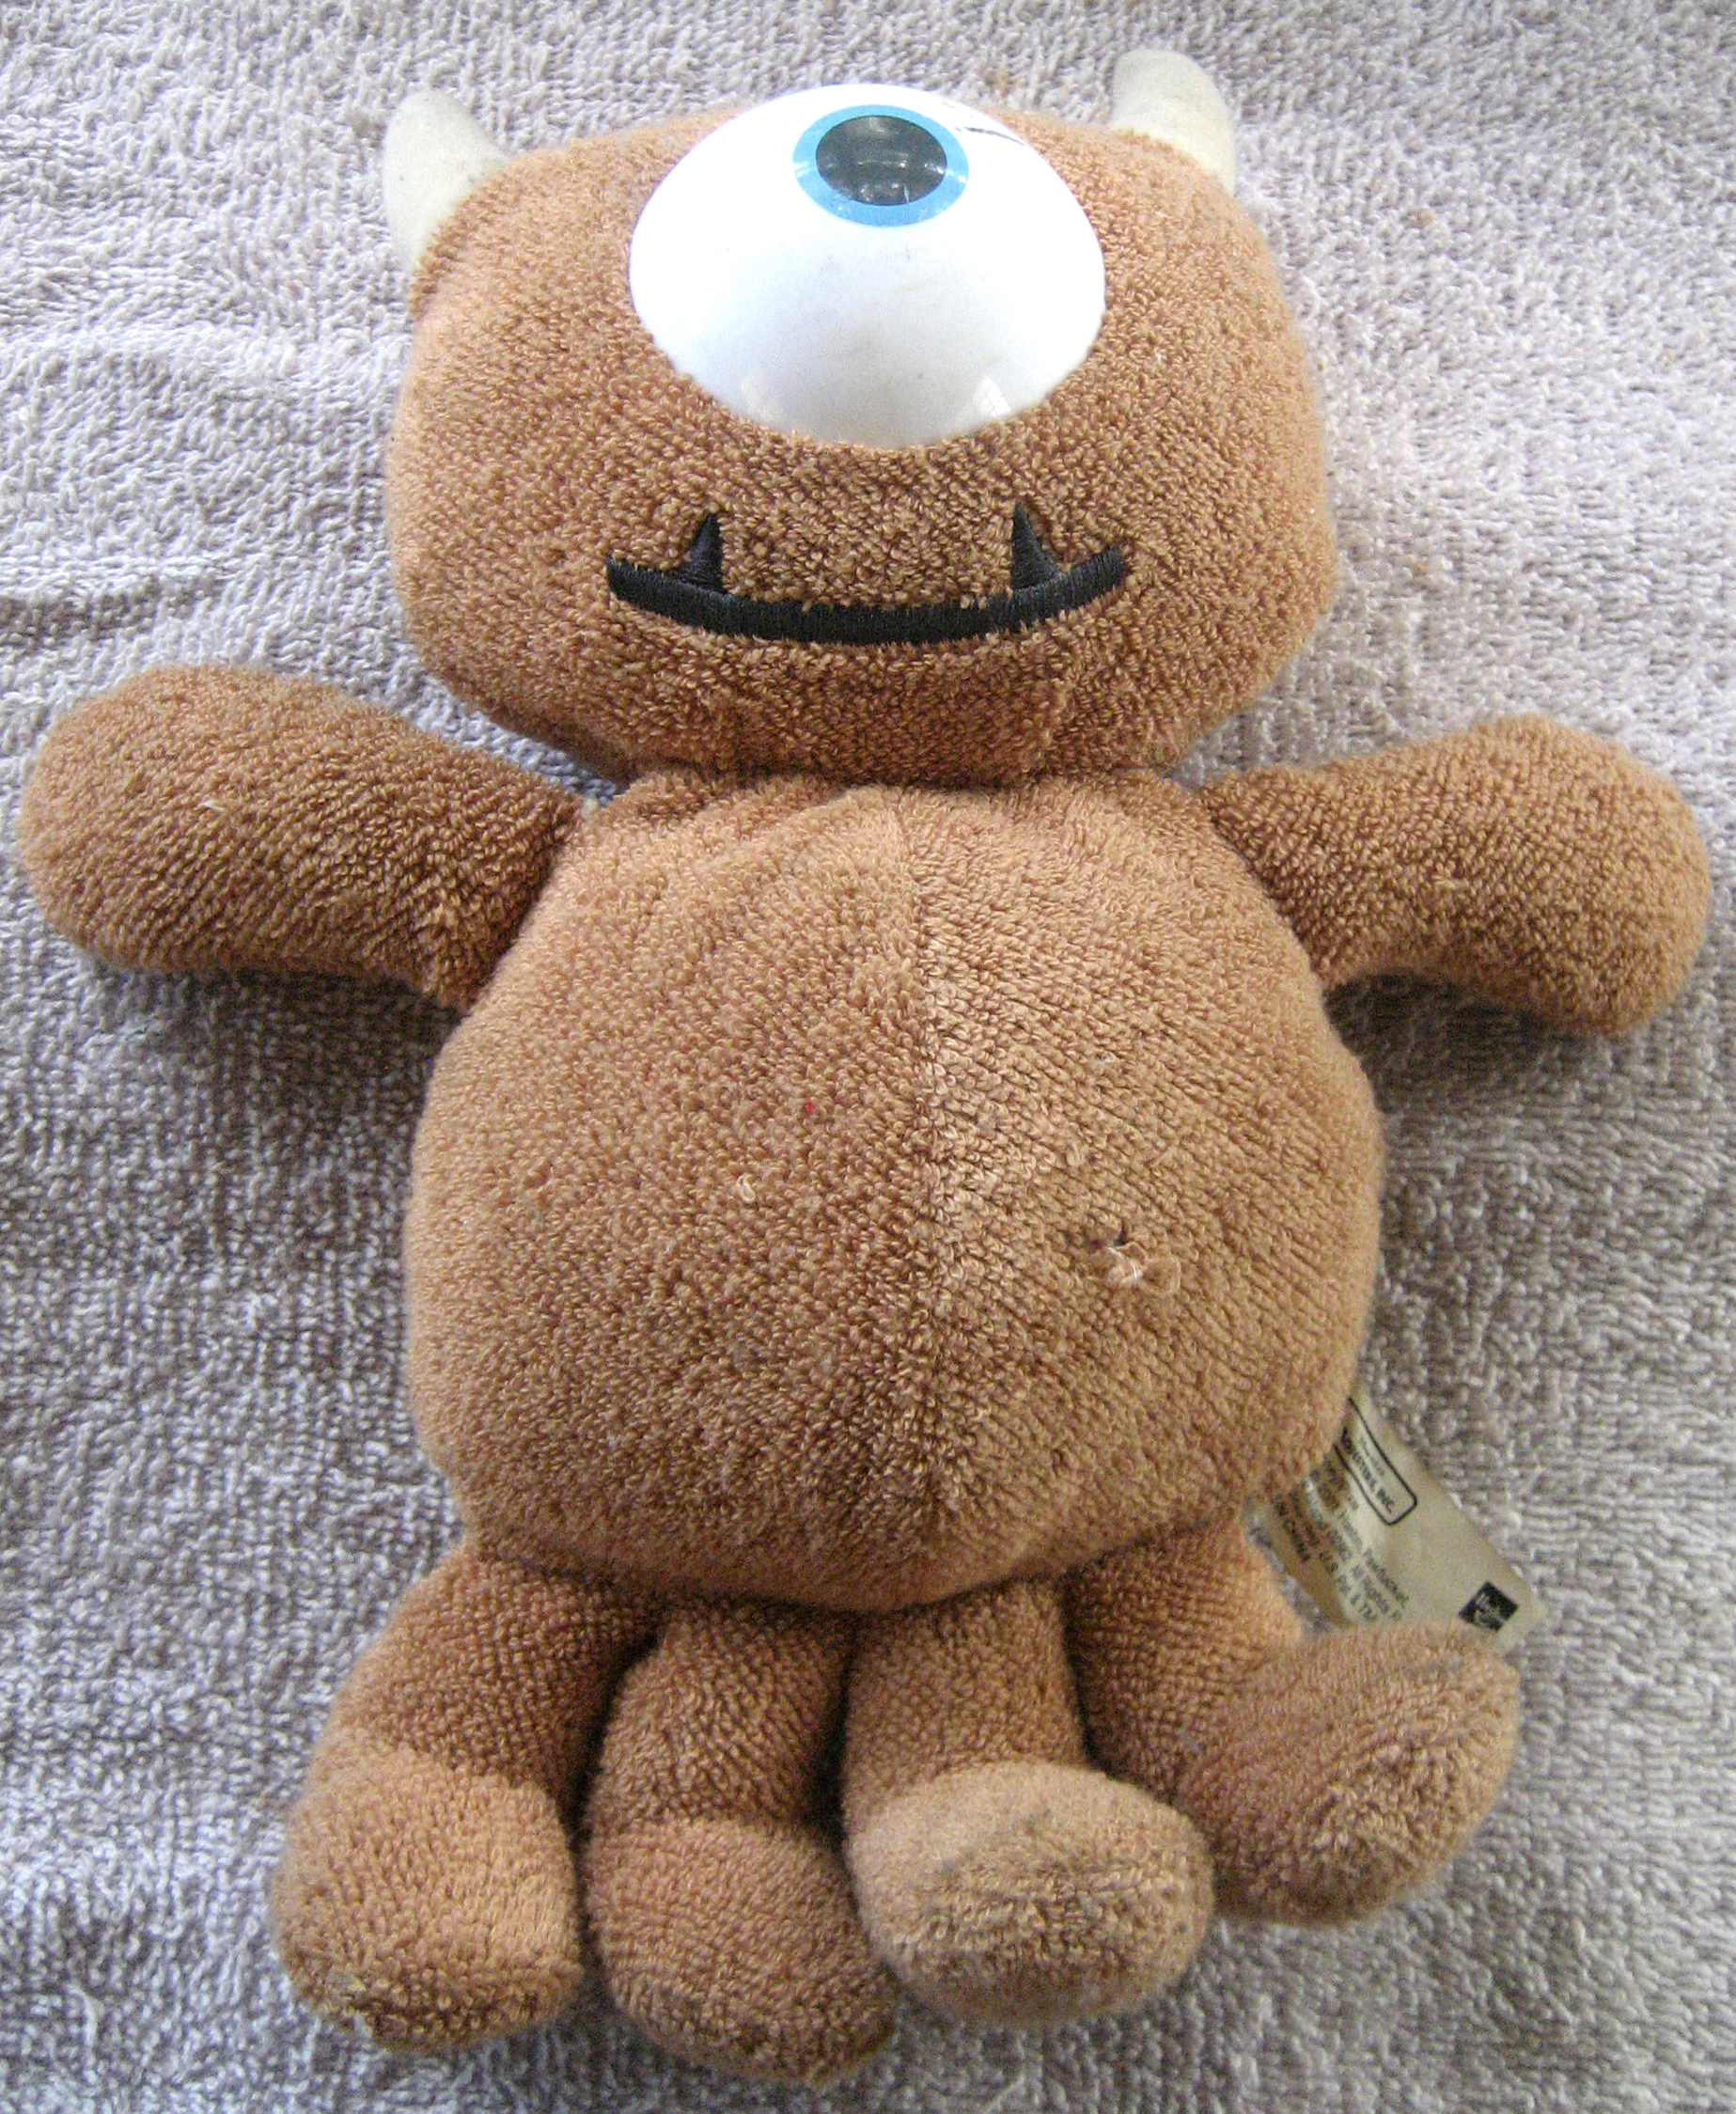 selling handmade stuffed animals